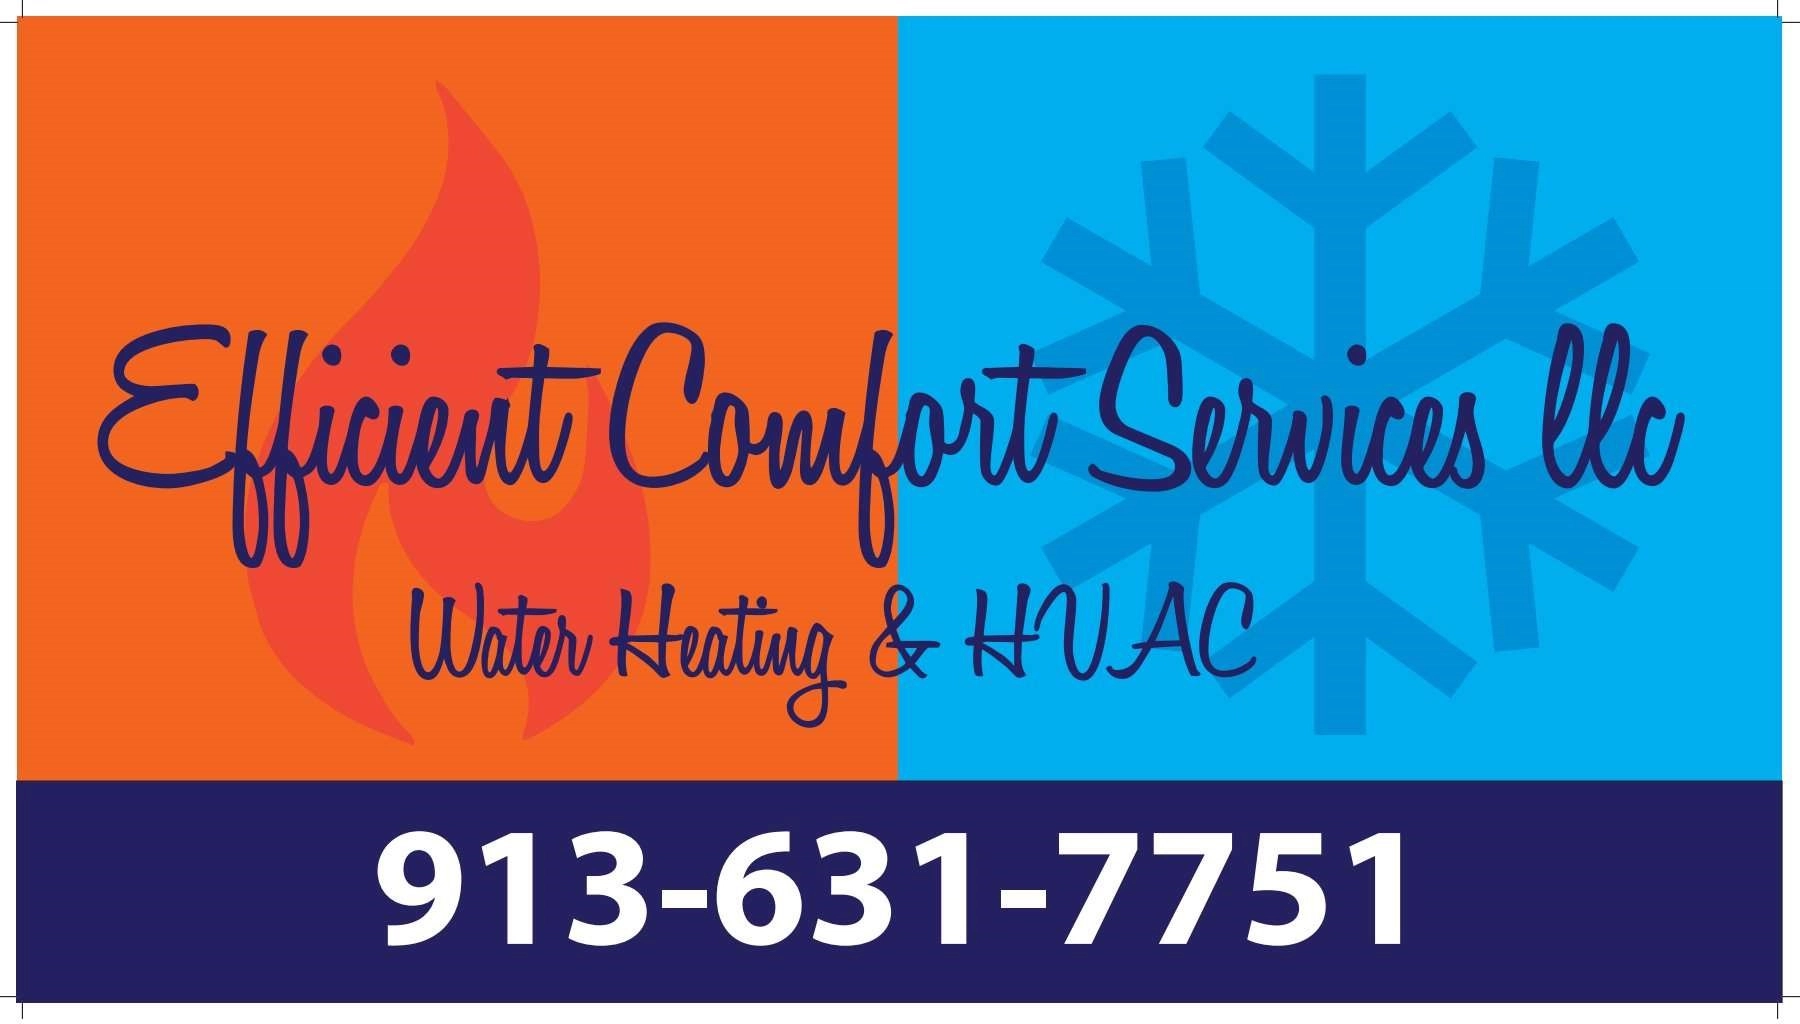 Efficient Comfort Services LLC Logo